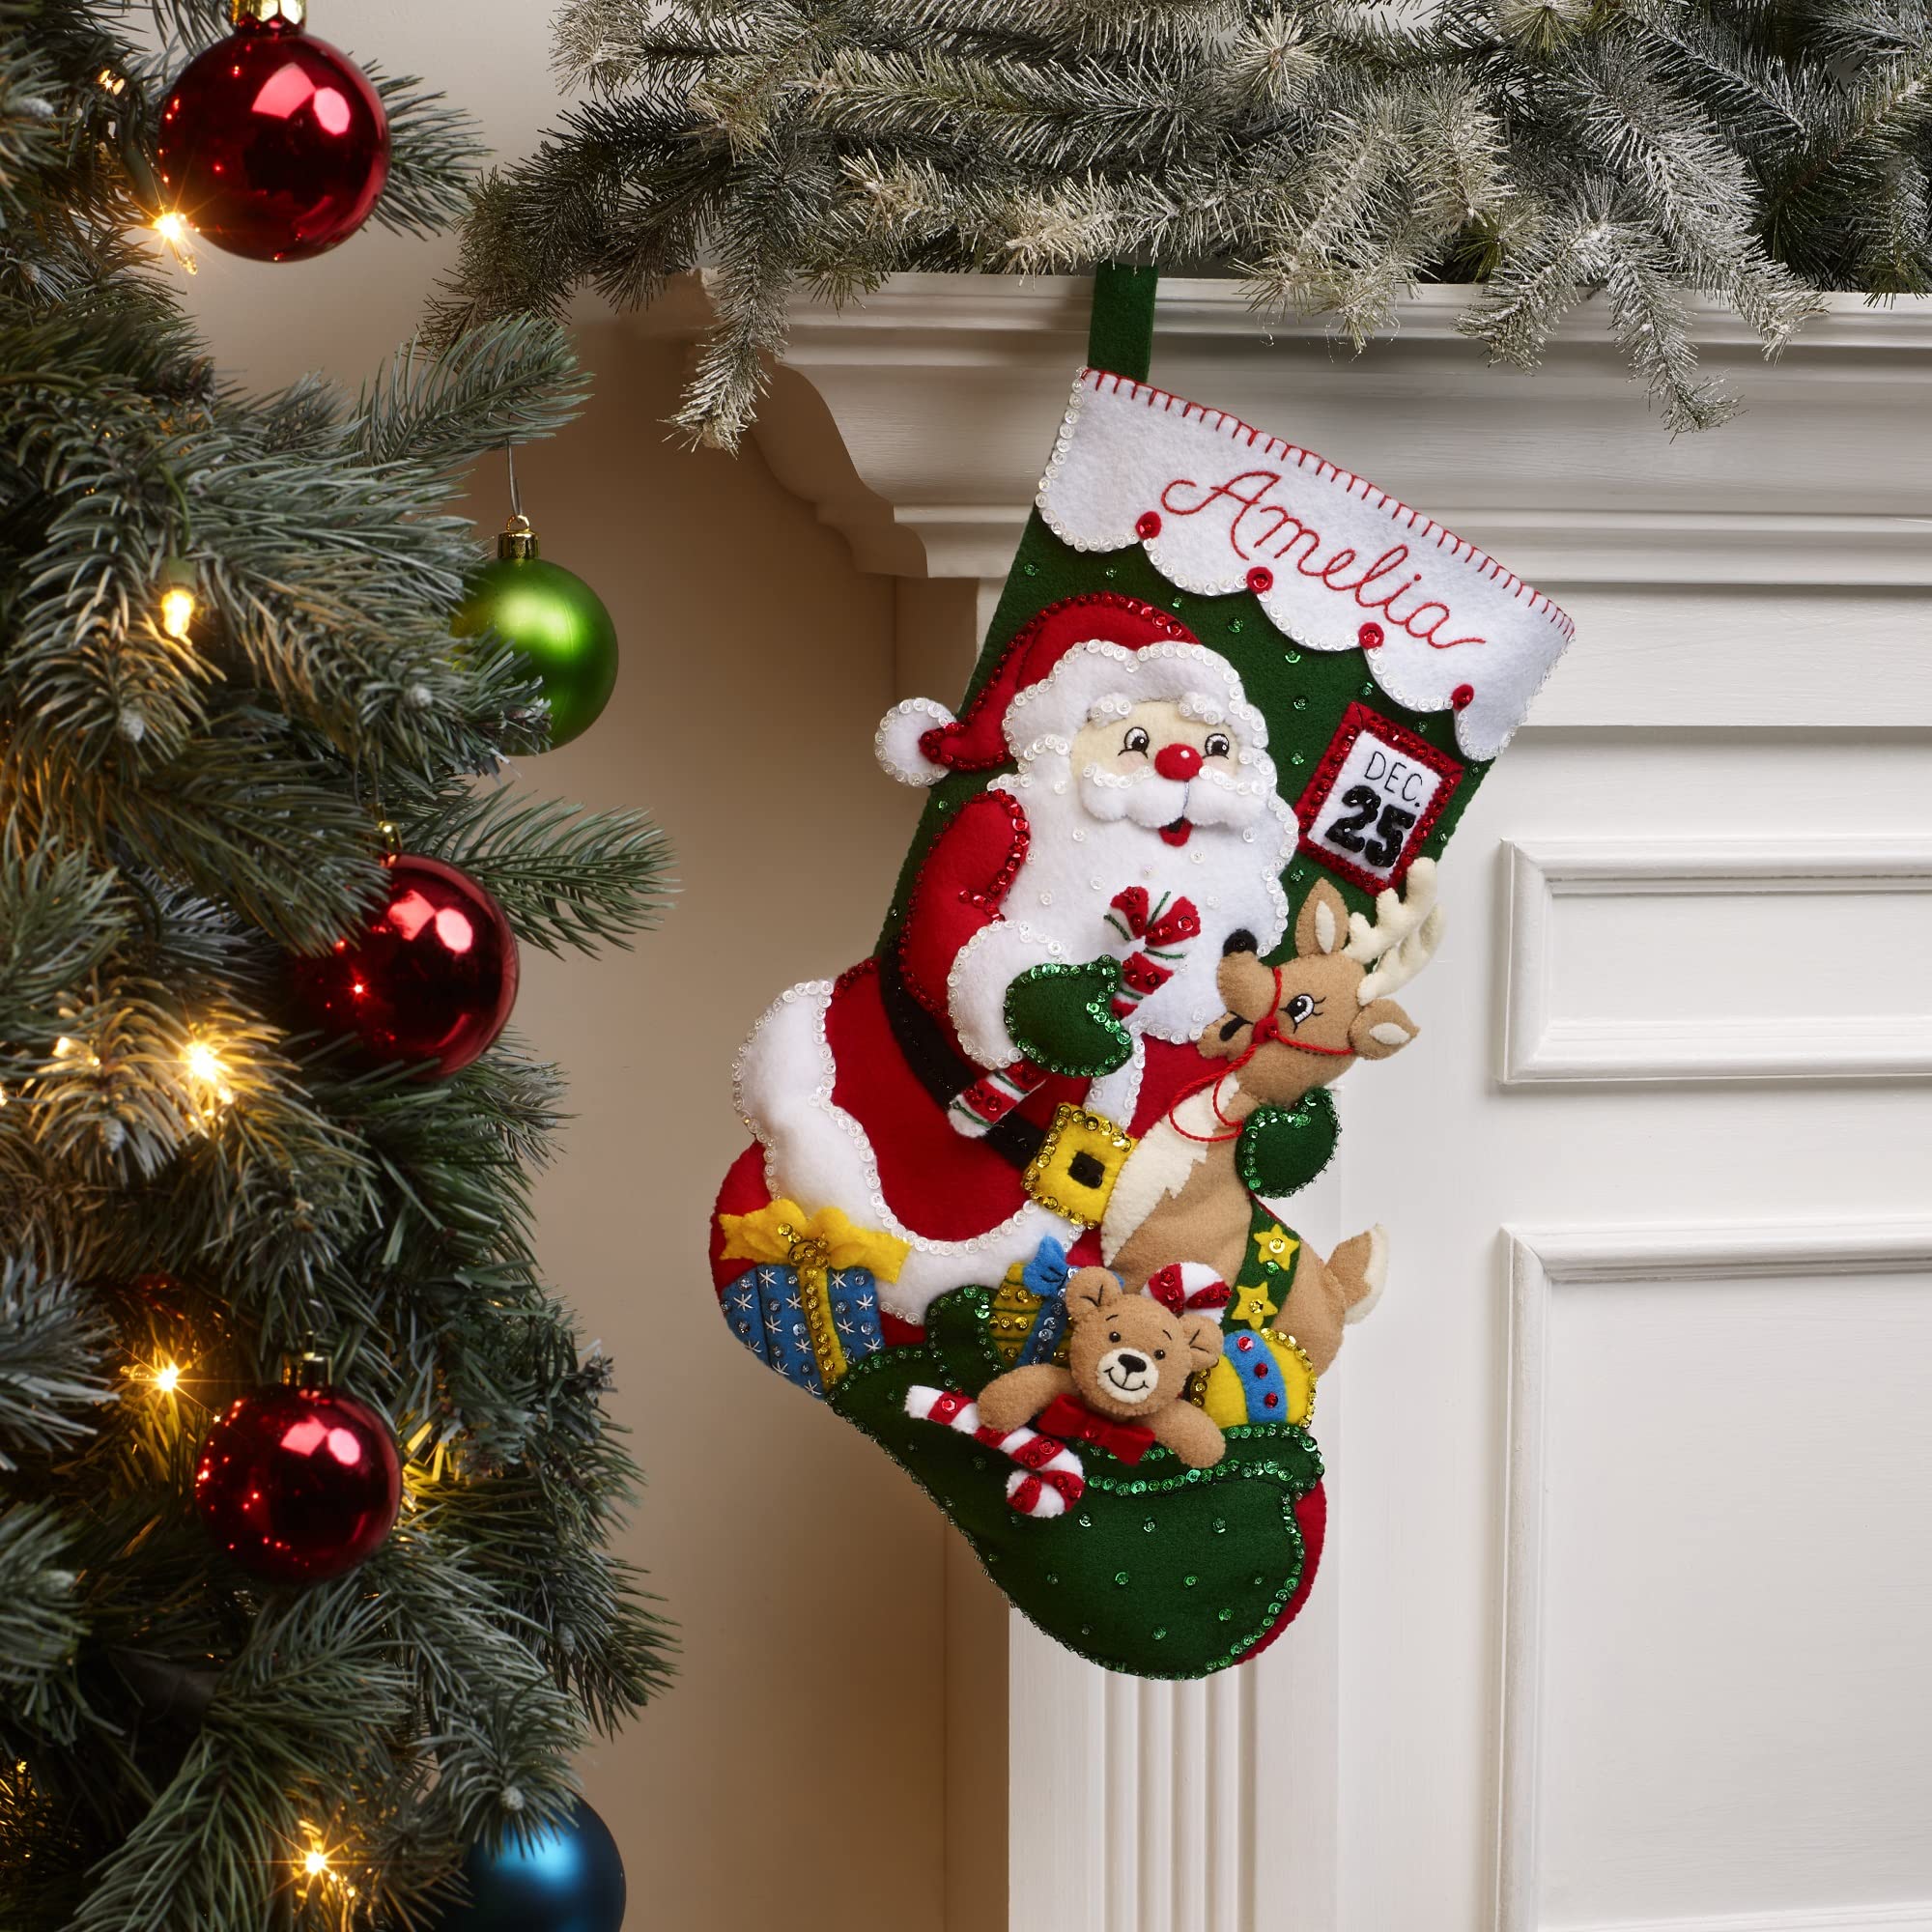 Bucilla Felt Applique Christmas Stocking Kit, Santa and Friends 18